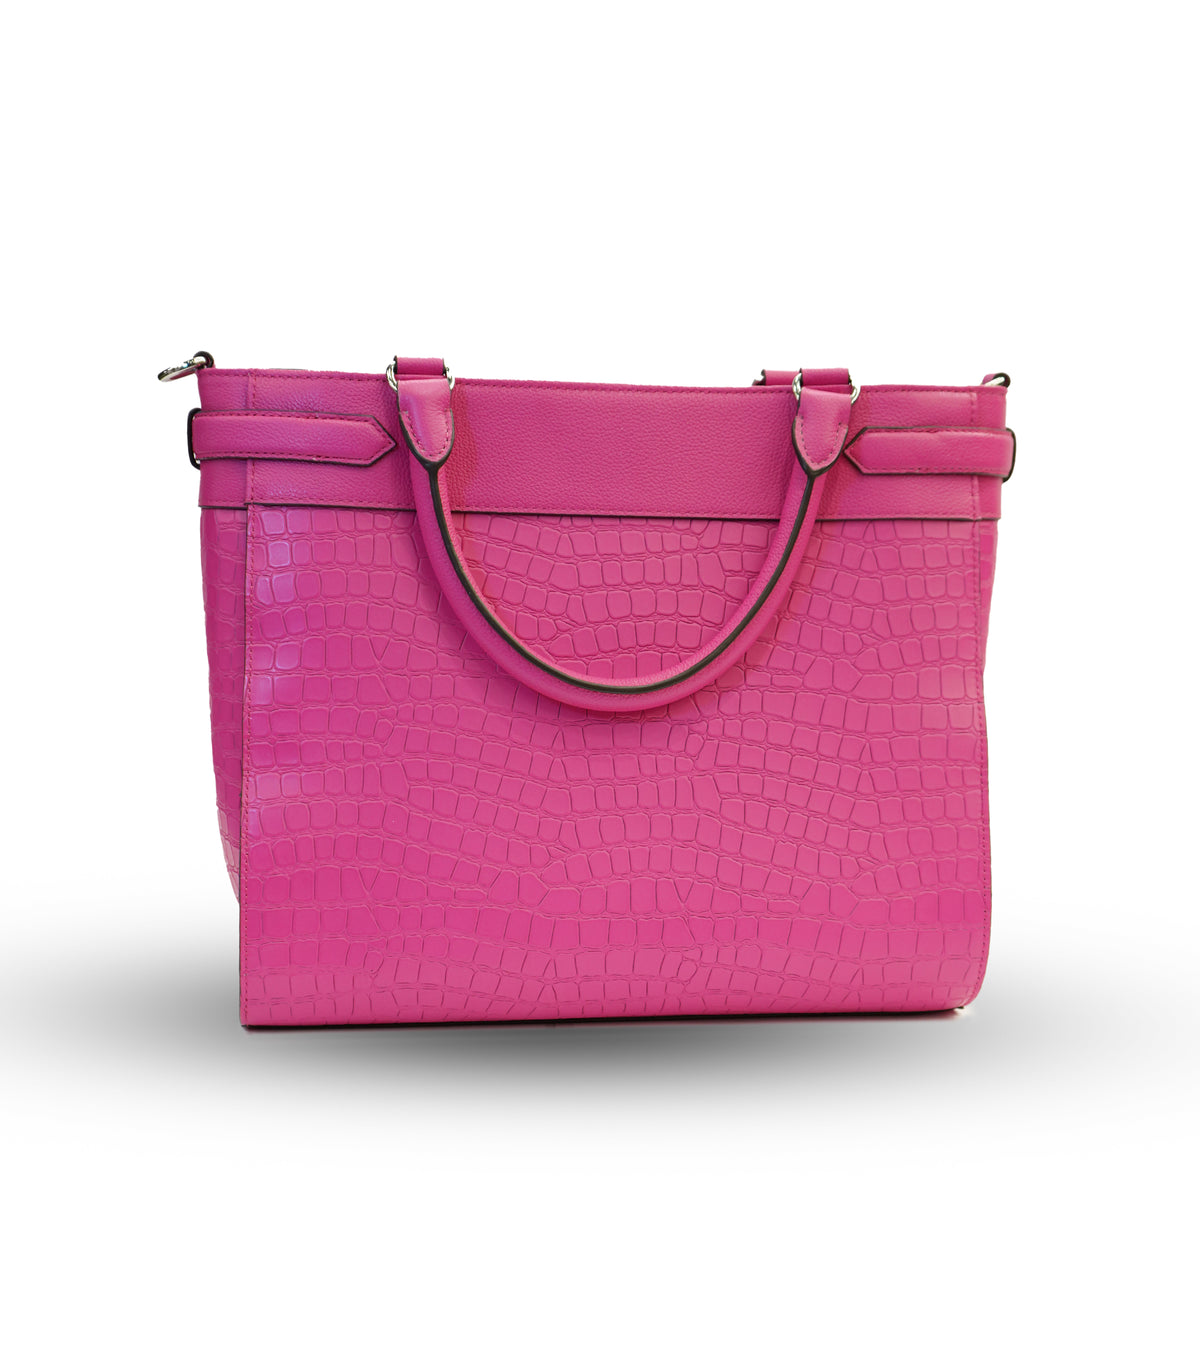 Croco Pink Satchel Bag